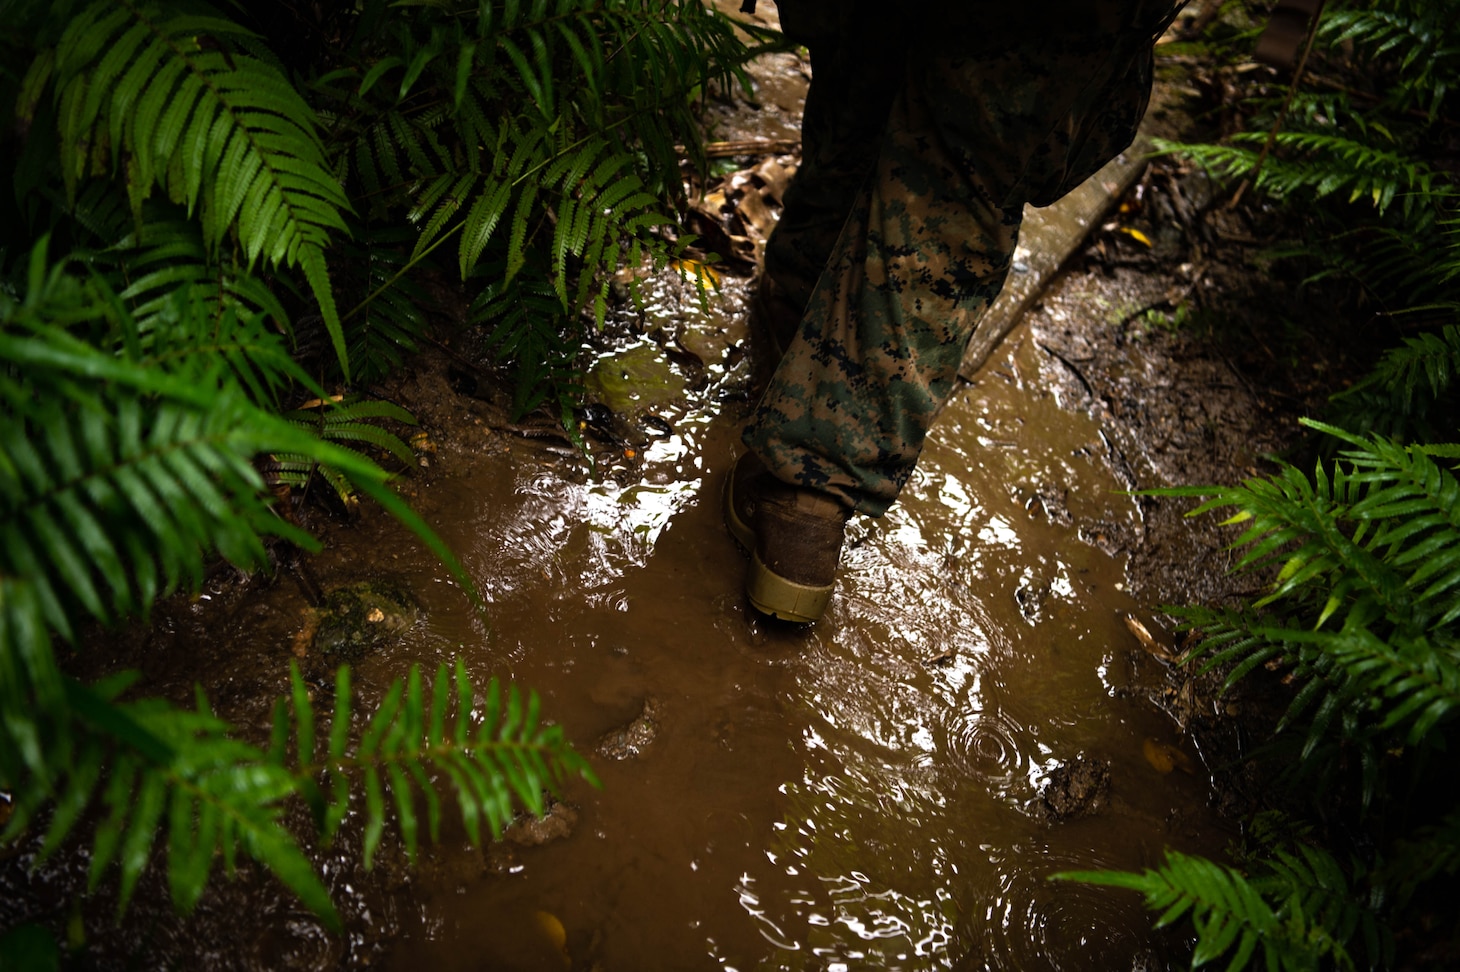 A sailor's foot walking through muddy water.